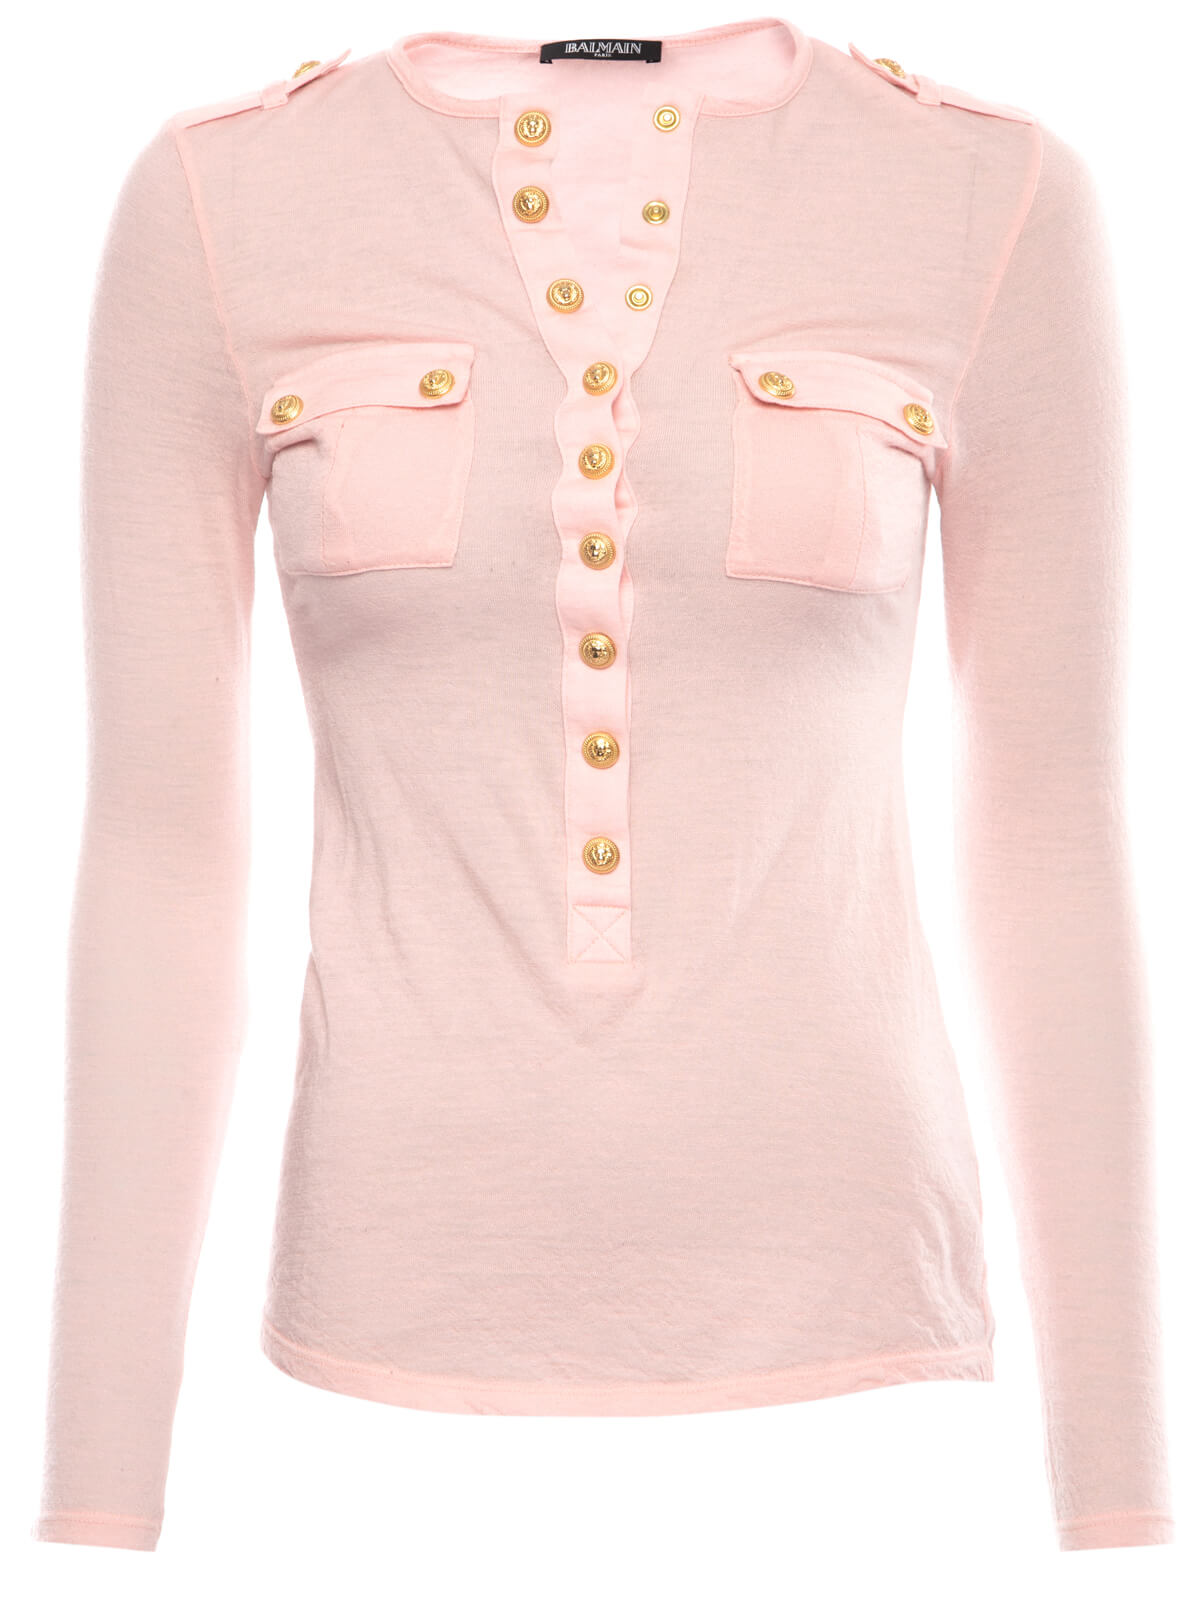 Balmain Women's Button Up Top, Size 8 UK, Pink